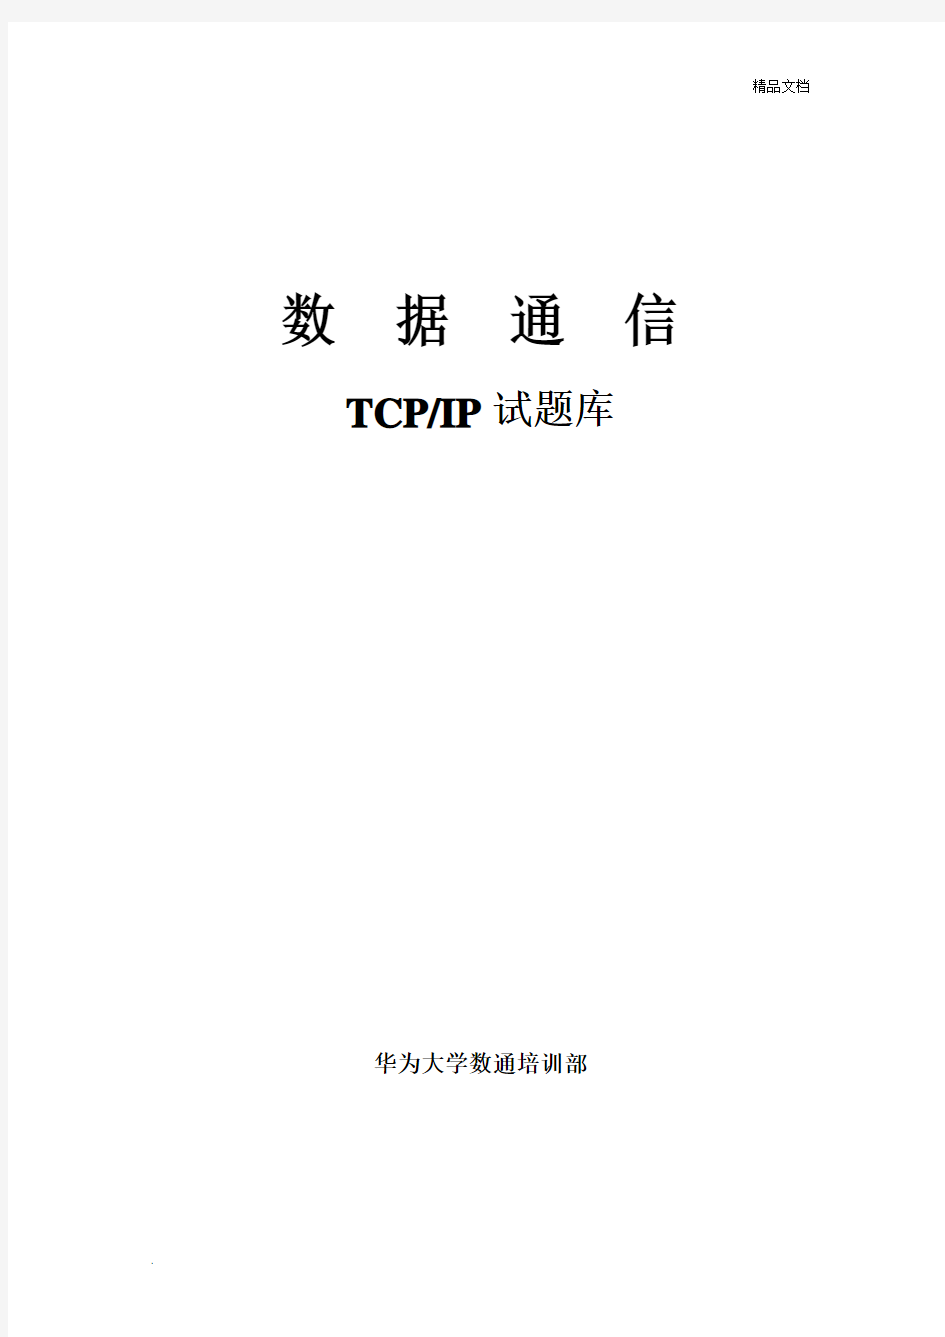 TCPIP试题库 (2)